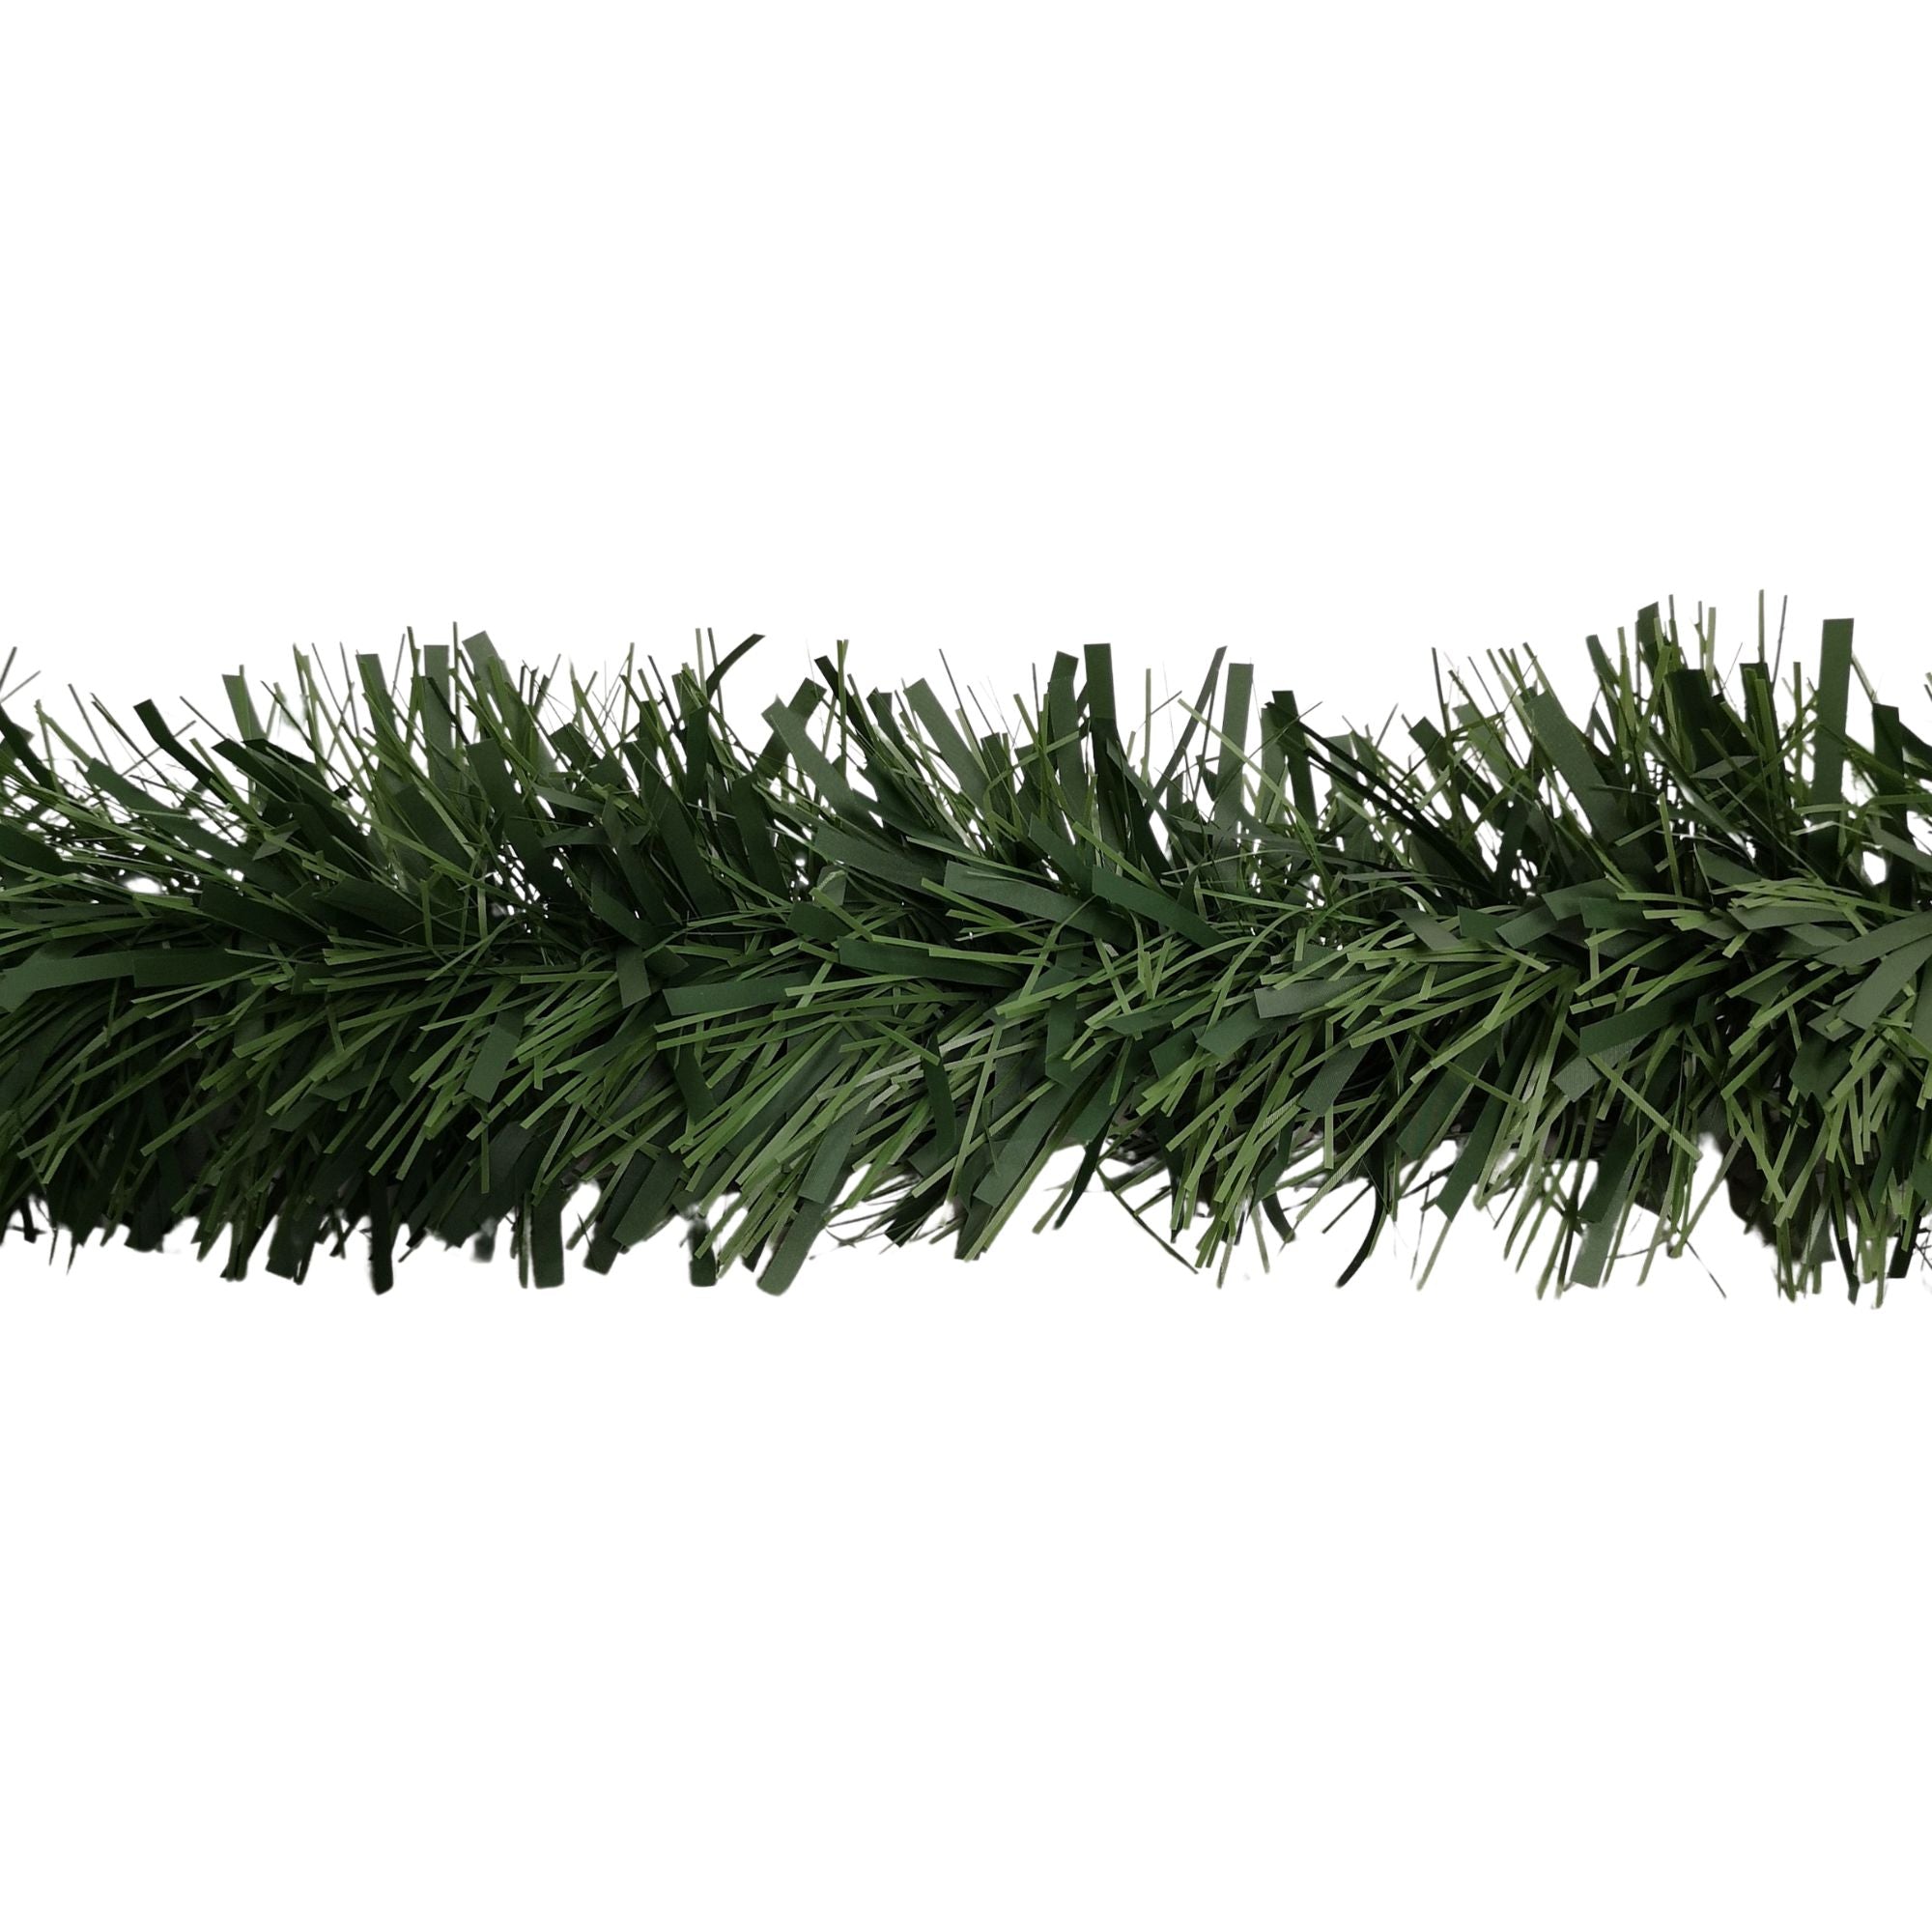 3m x 15cm Festive 6 Ply Chunky Green Pine Christmas Tinsel Garland Decoration